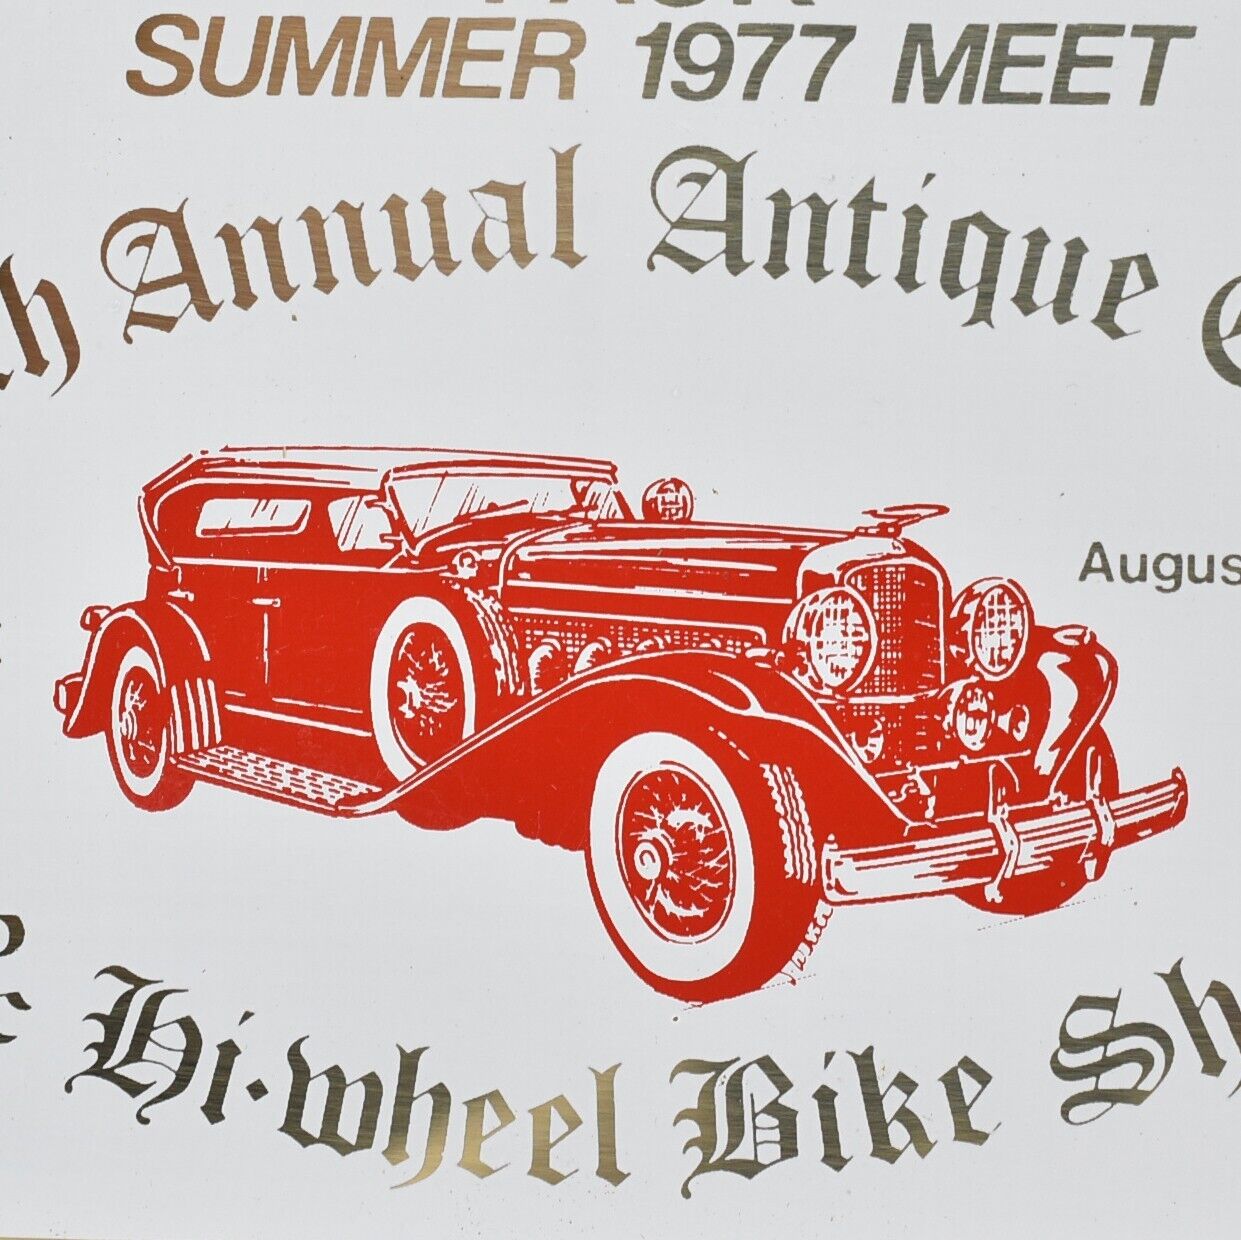 1977 Antique Car Hi-Wheel Bike Show Klub Club Meet Piqua Miami County Ohio